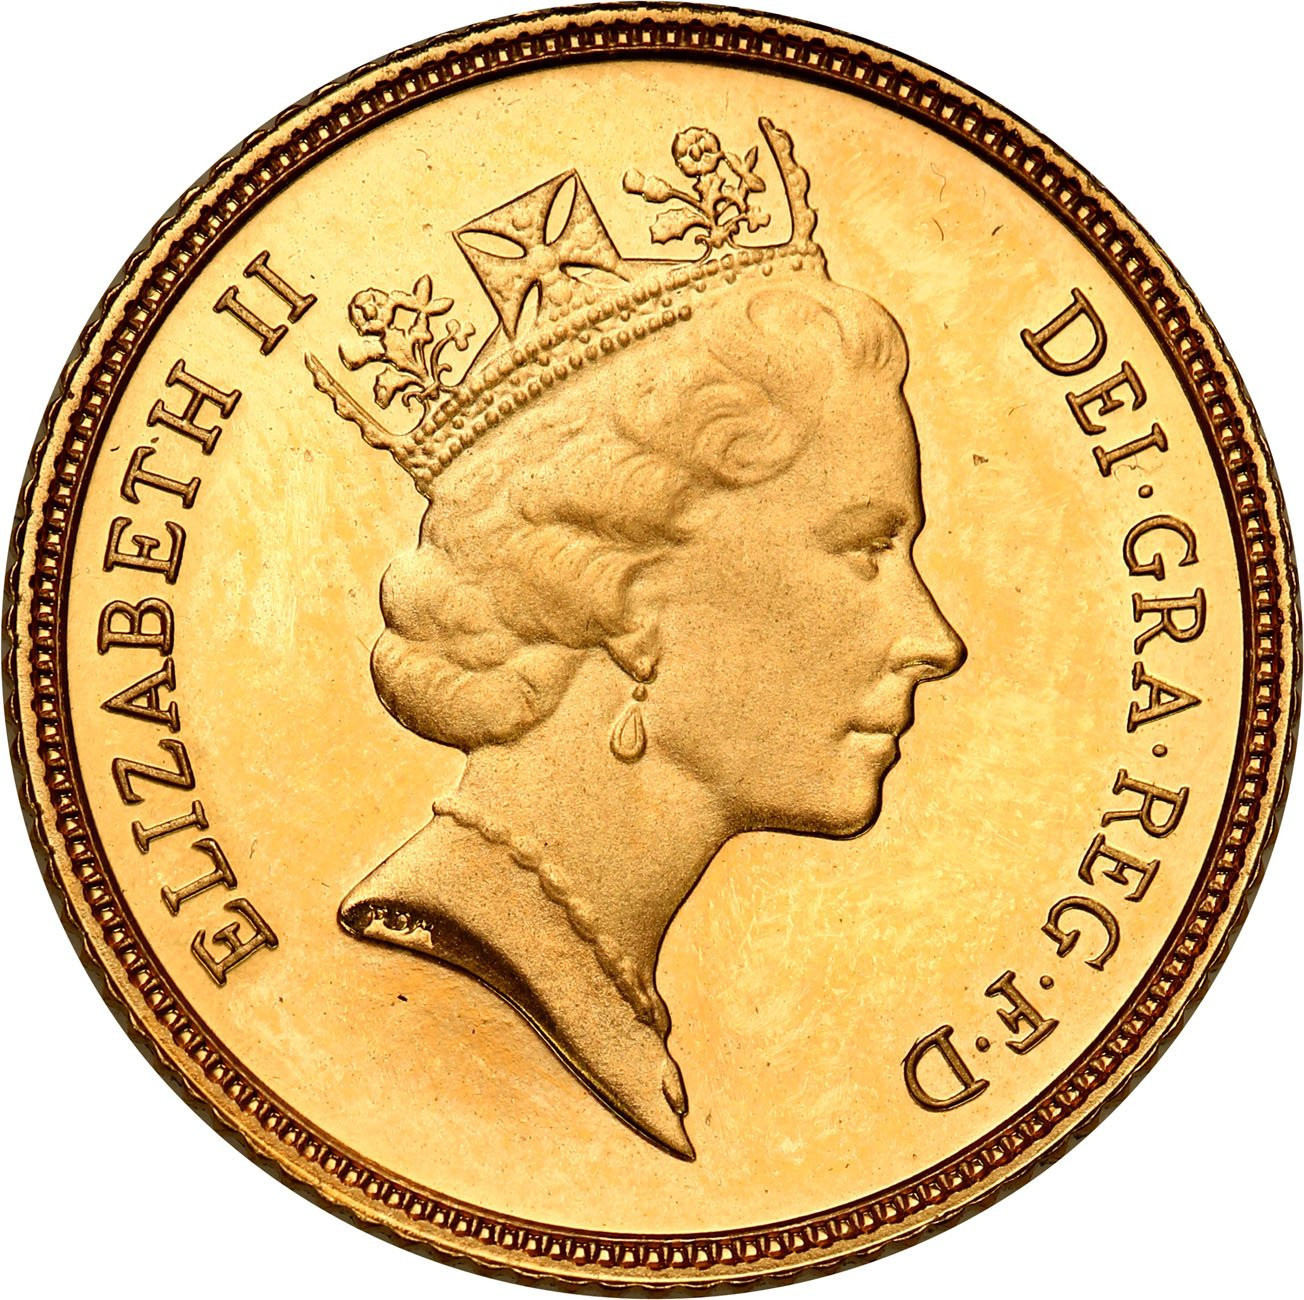 Wielka Brytania. Elżbieta II 1/2 suwerena 1988 - stempel lustrzany